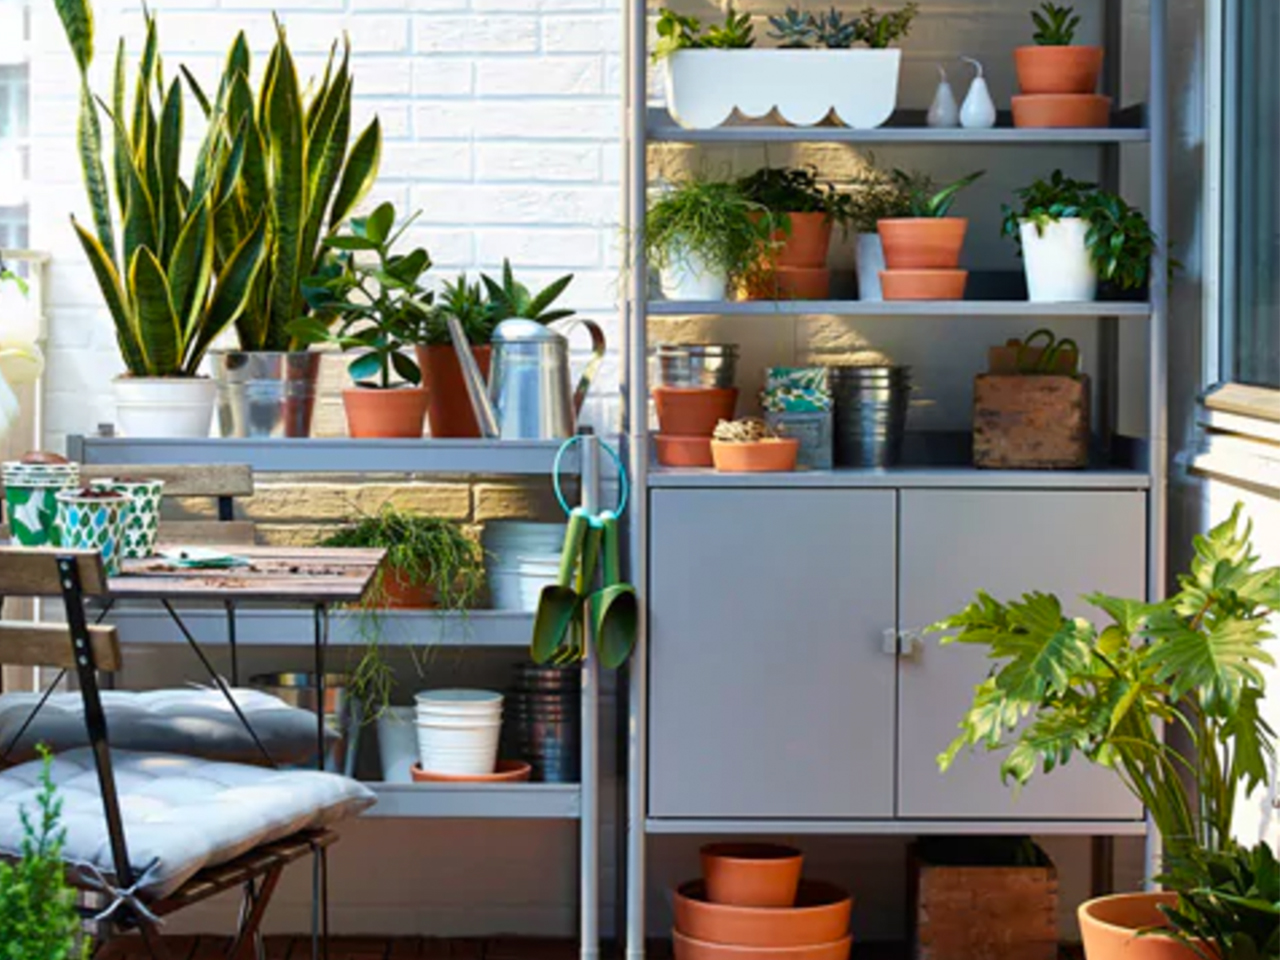 Green balcony garden plants - ideas